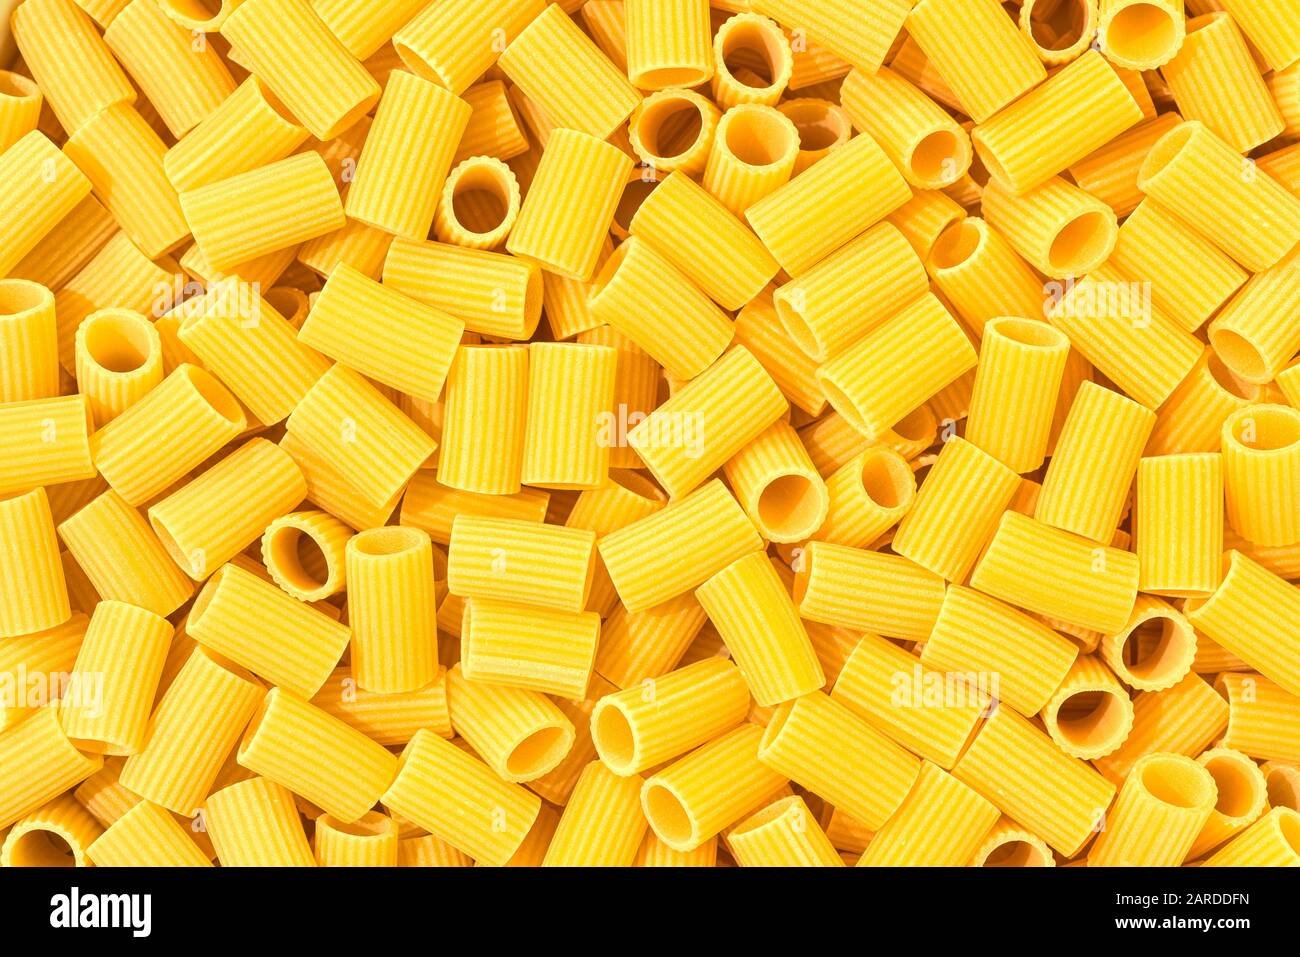 Italian Macaroni Pasta half sleeves striped raw food background or texture close up Stock Photo